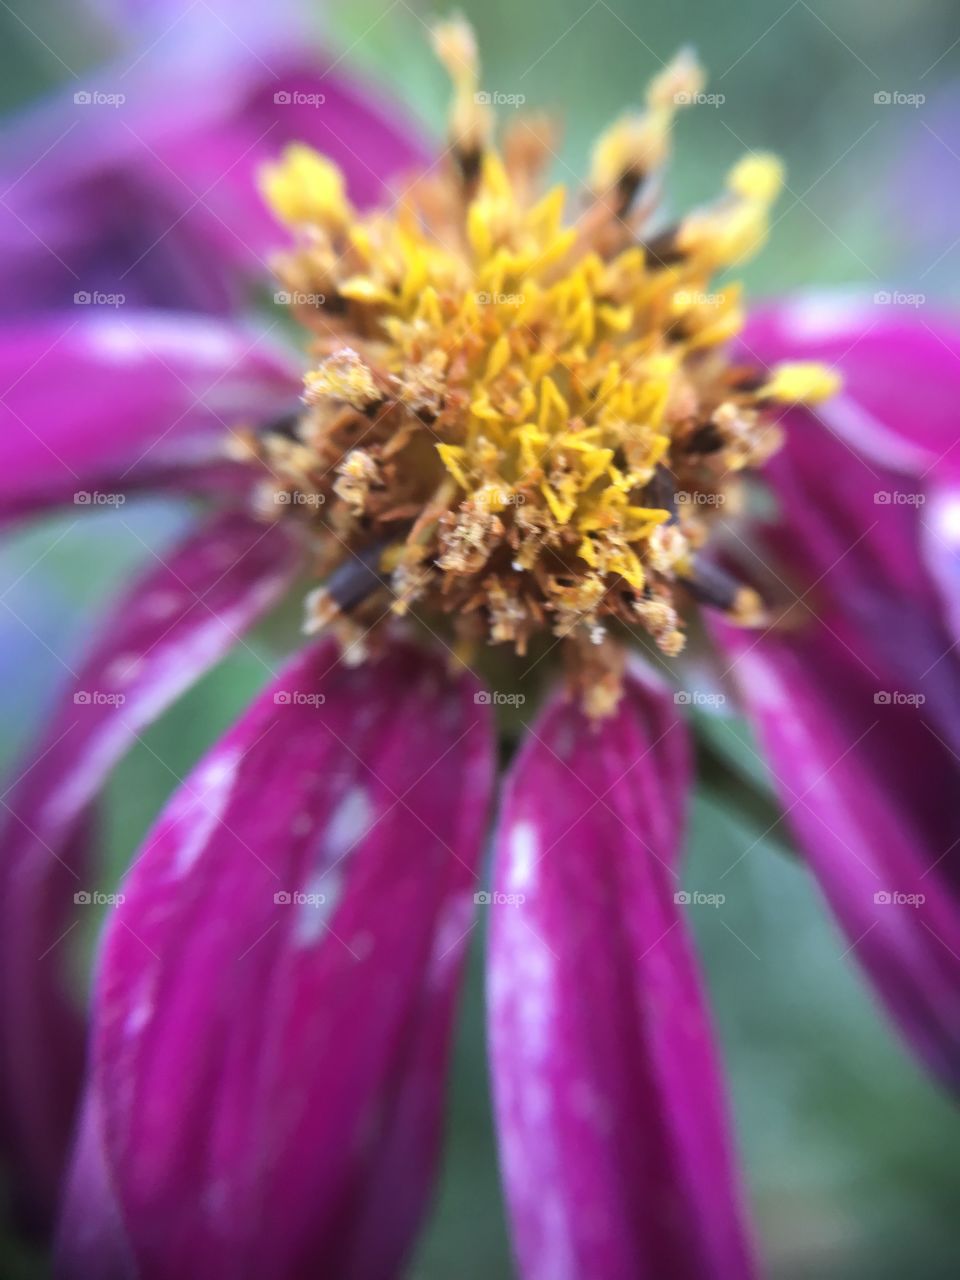 Flower close up 